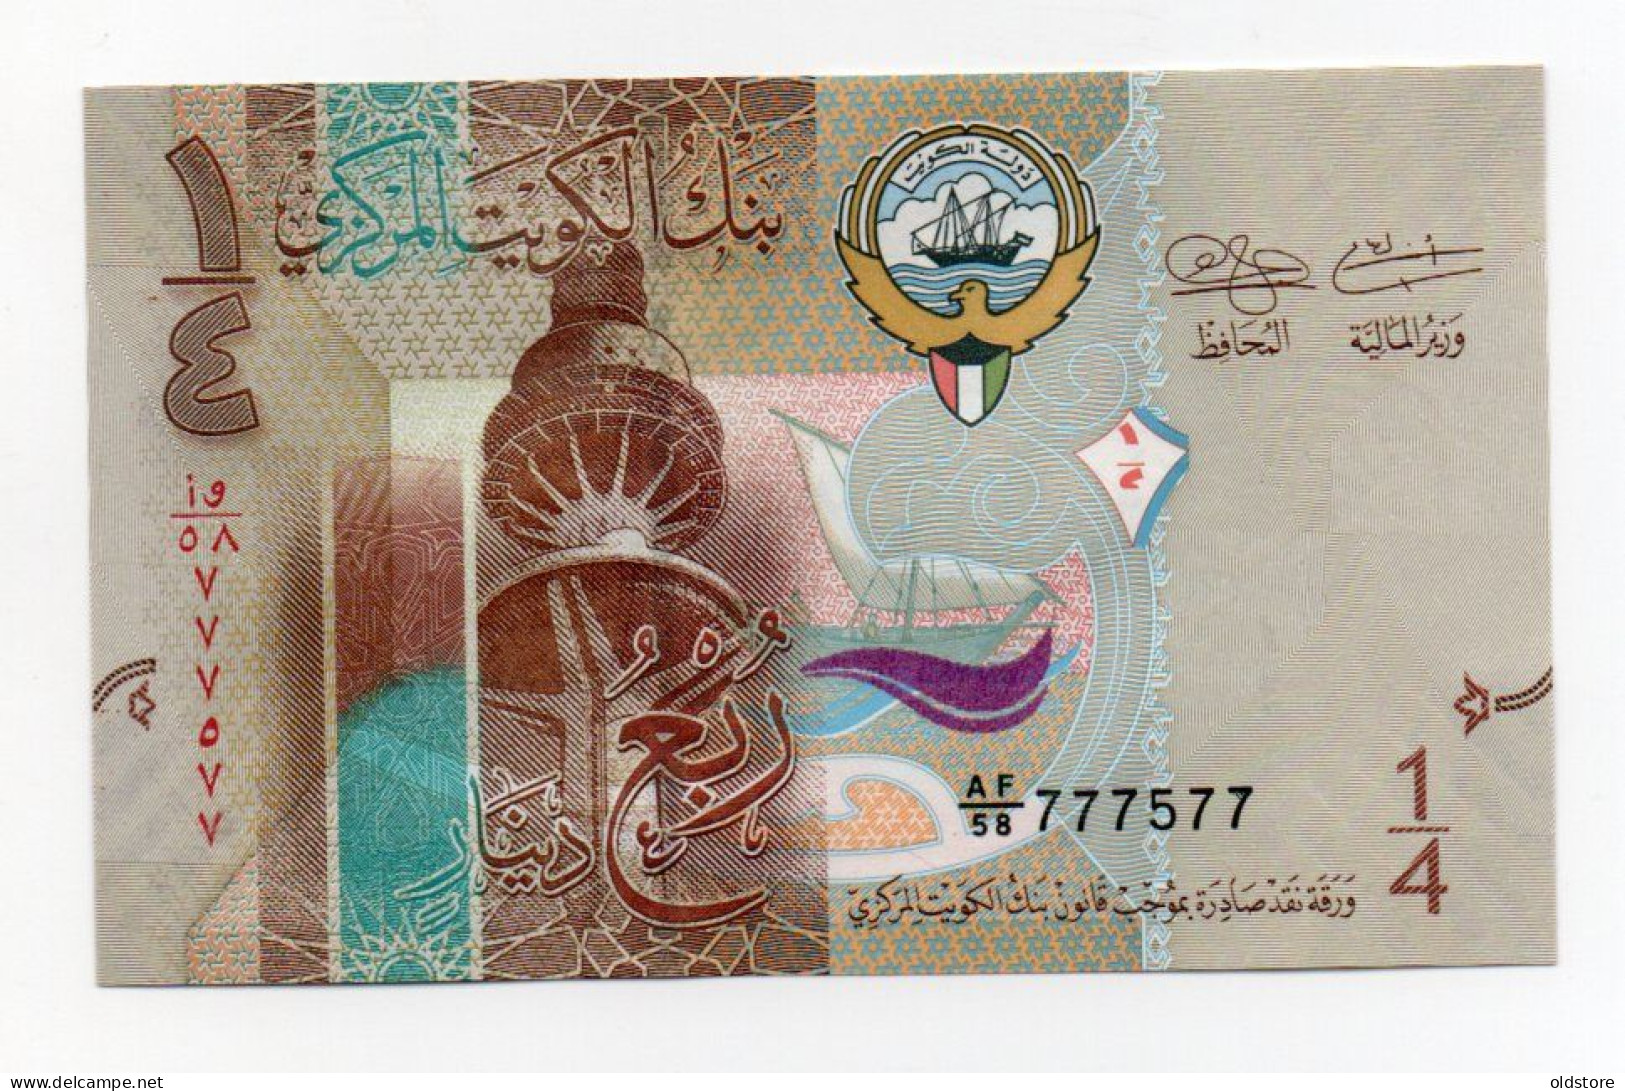 Kuwait Banknotes -  1/4 Dinar - Fancy Number 777577 - ND 2014 - UNC #5 - Kuwait